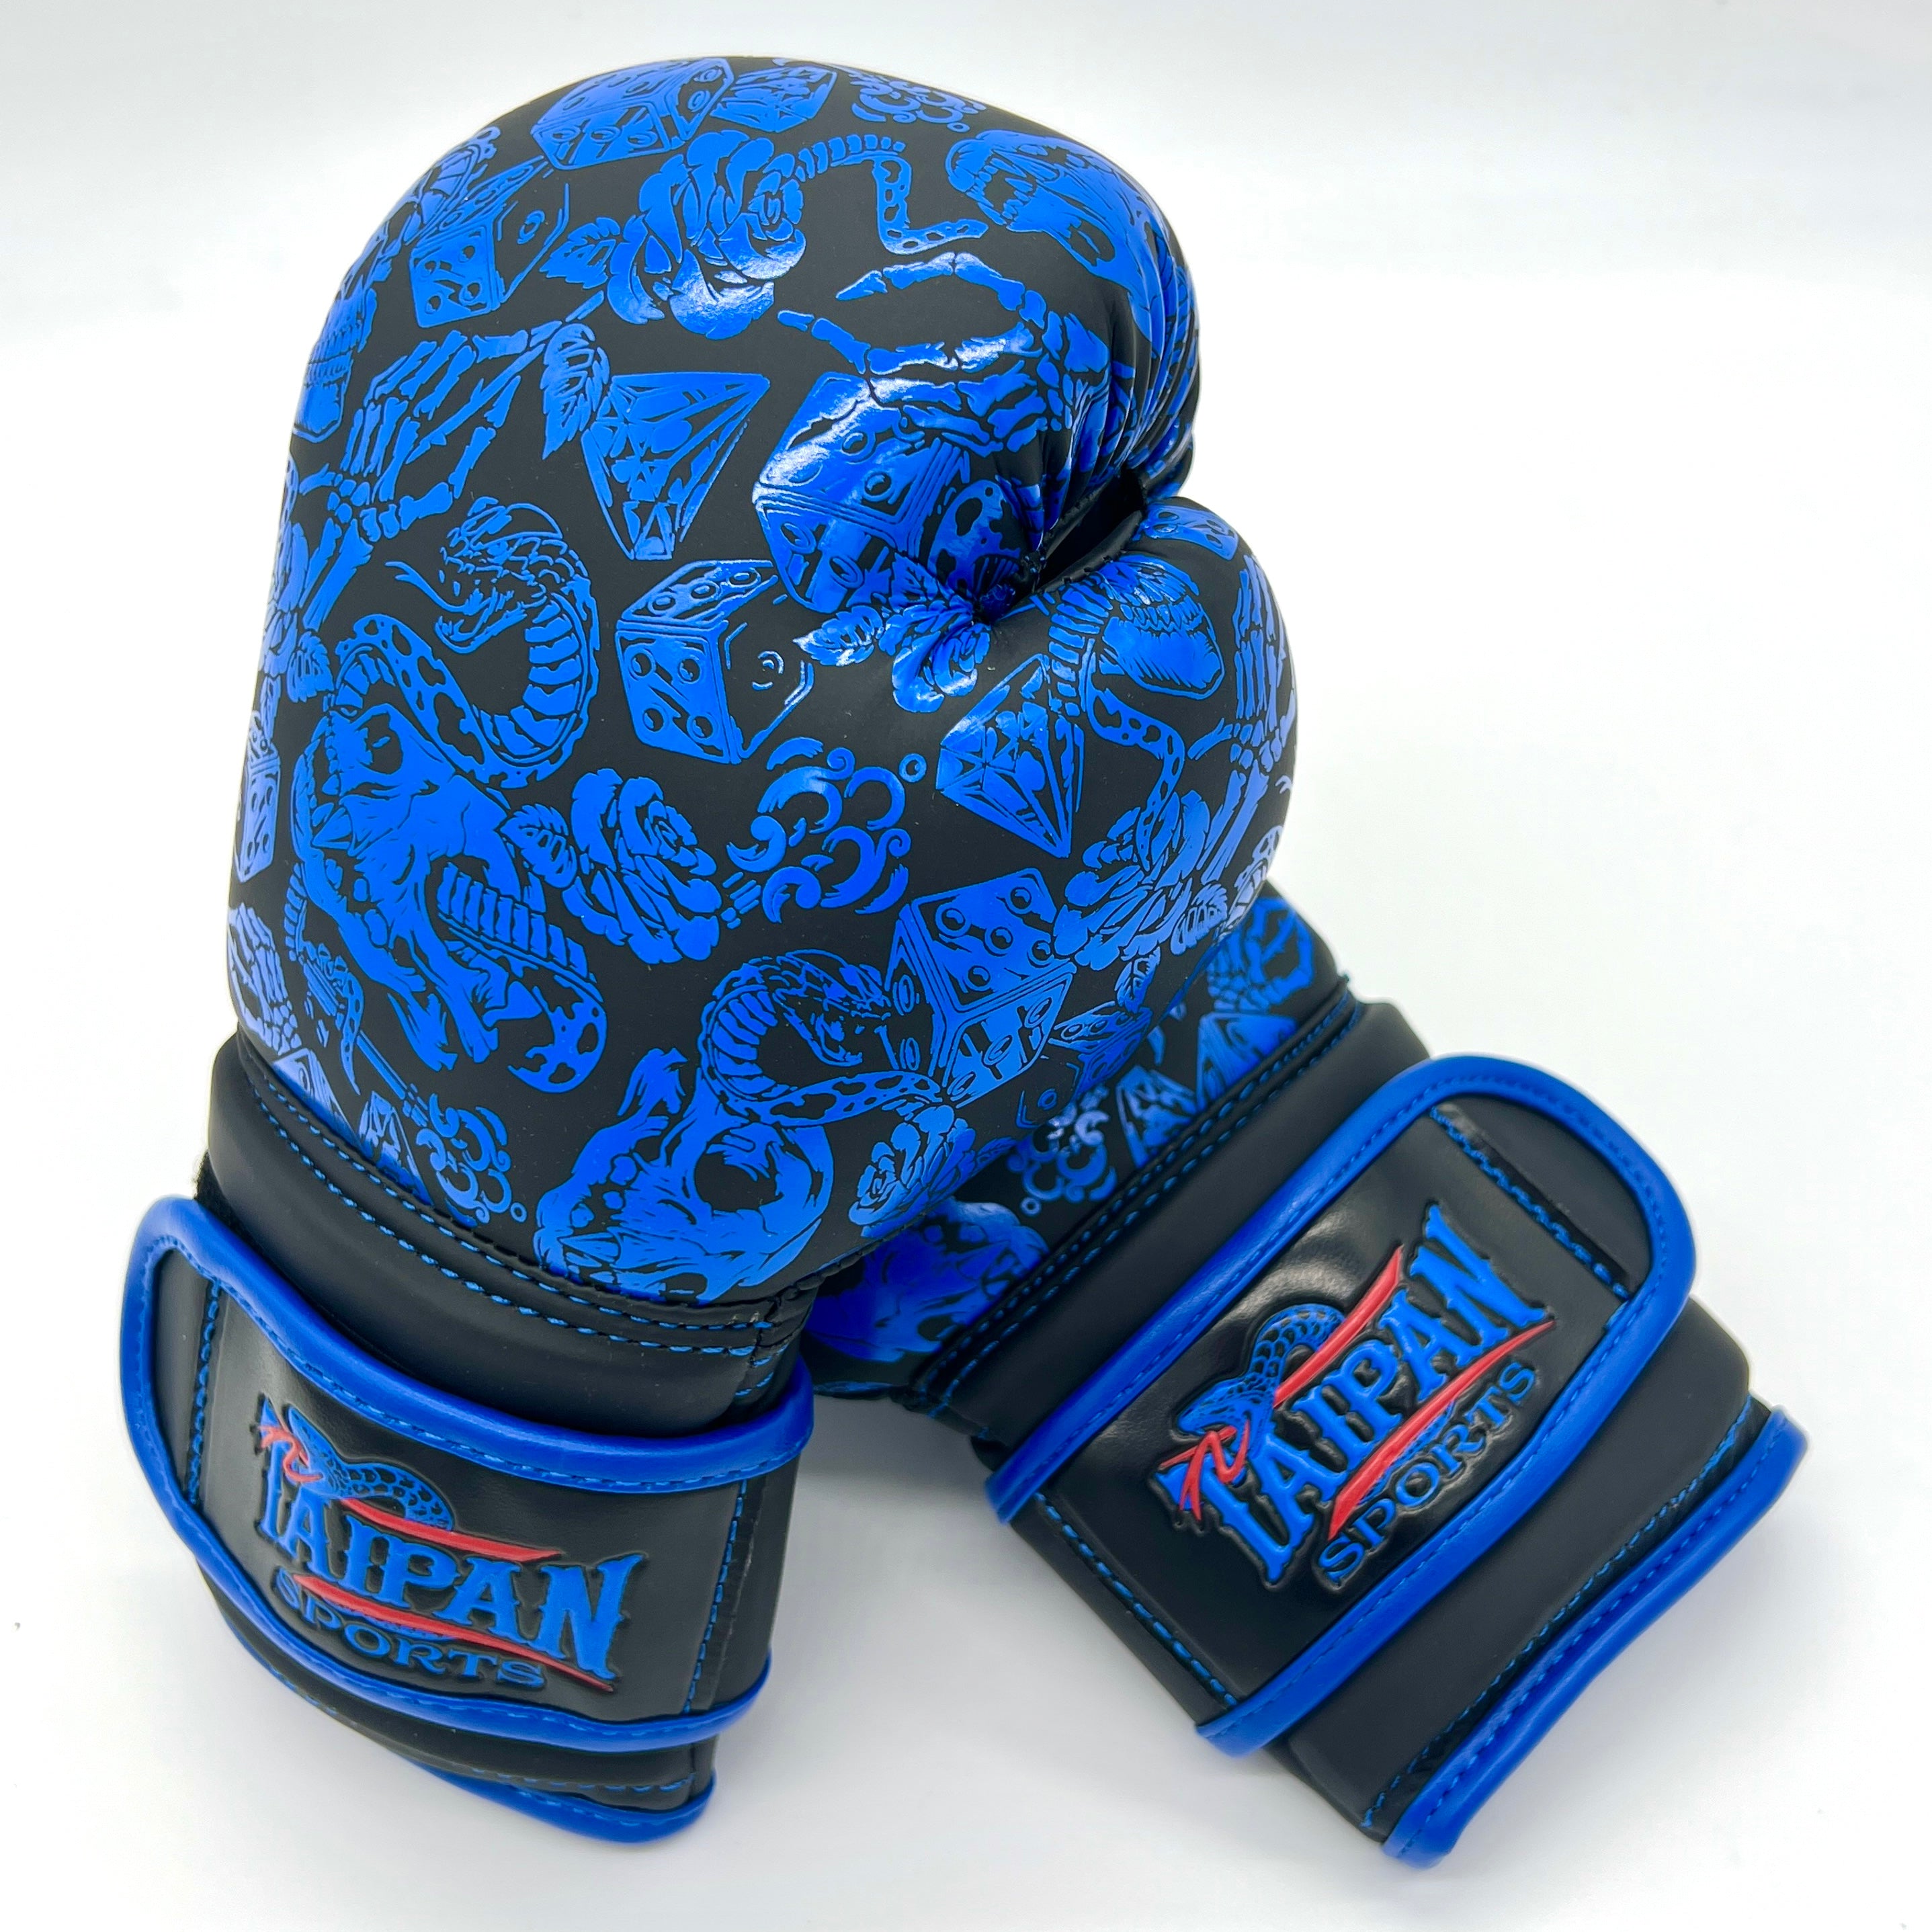 Blue Cobra Strike Boxing Gloves - Taipan Sports